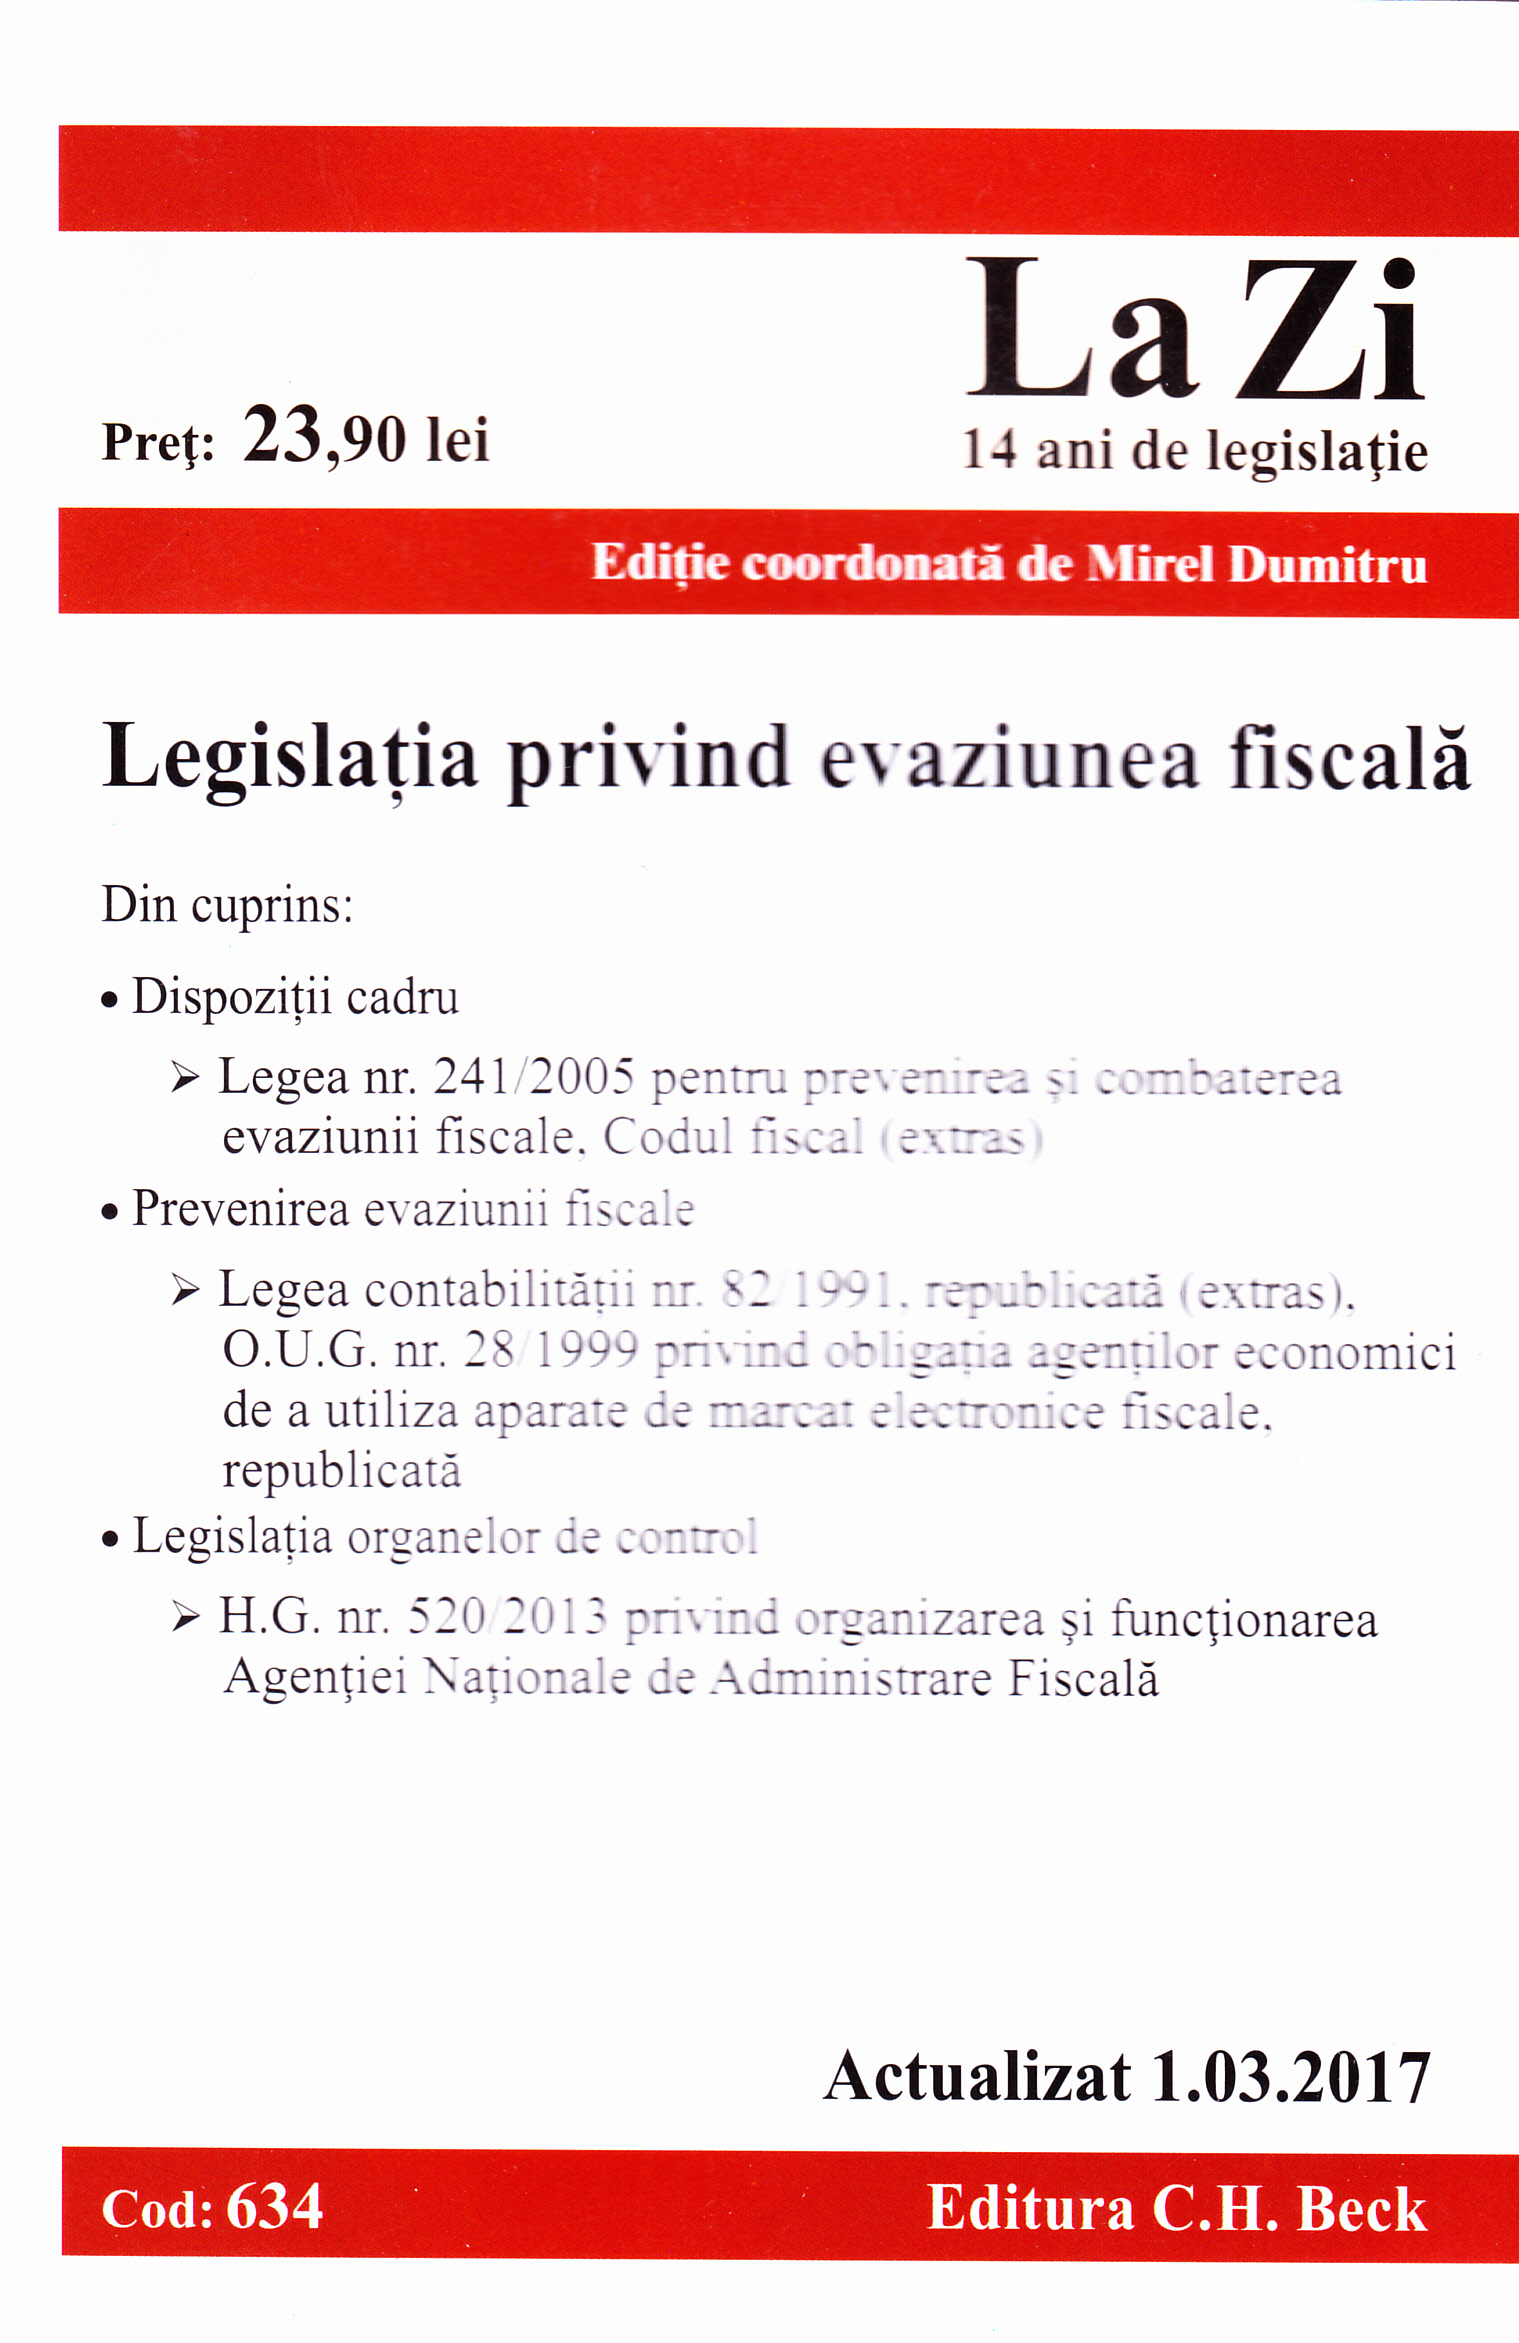 Legislatia privind evaziunea fiscala act. 1.03.2017